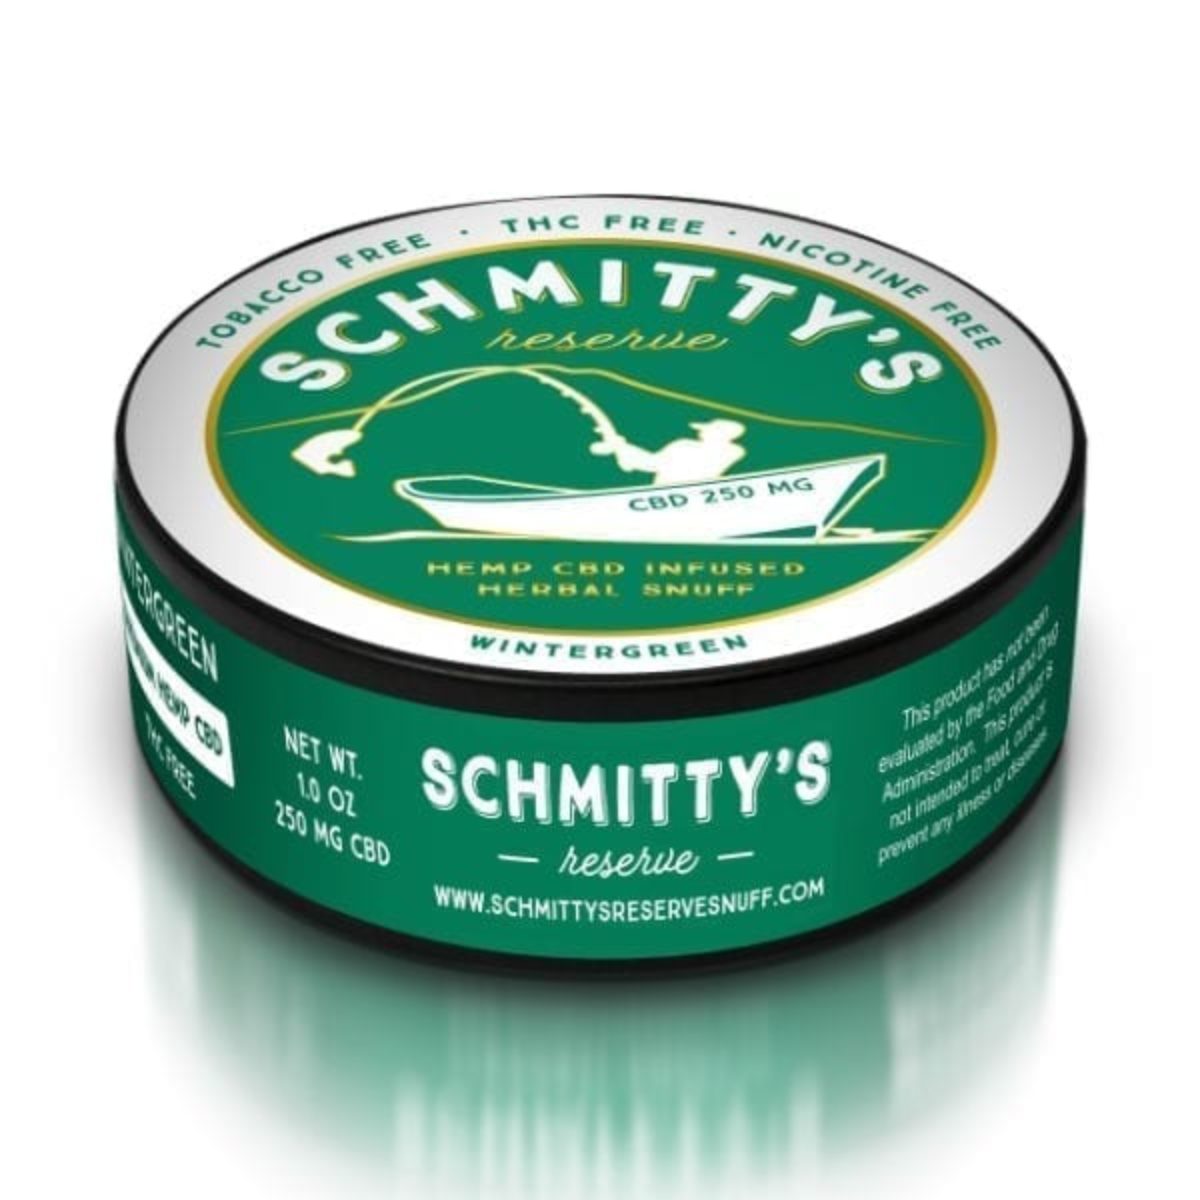 Schmitty's Snuff Reserve CBD Wintergreen Flavor